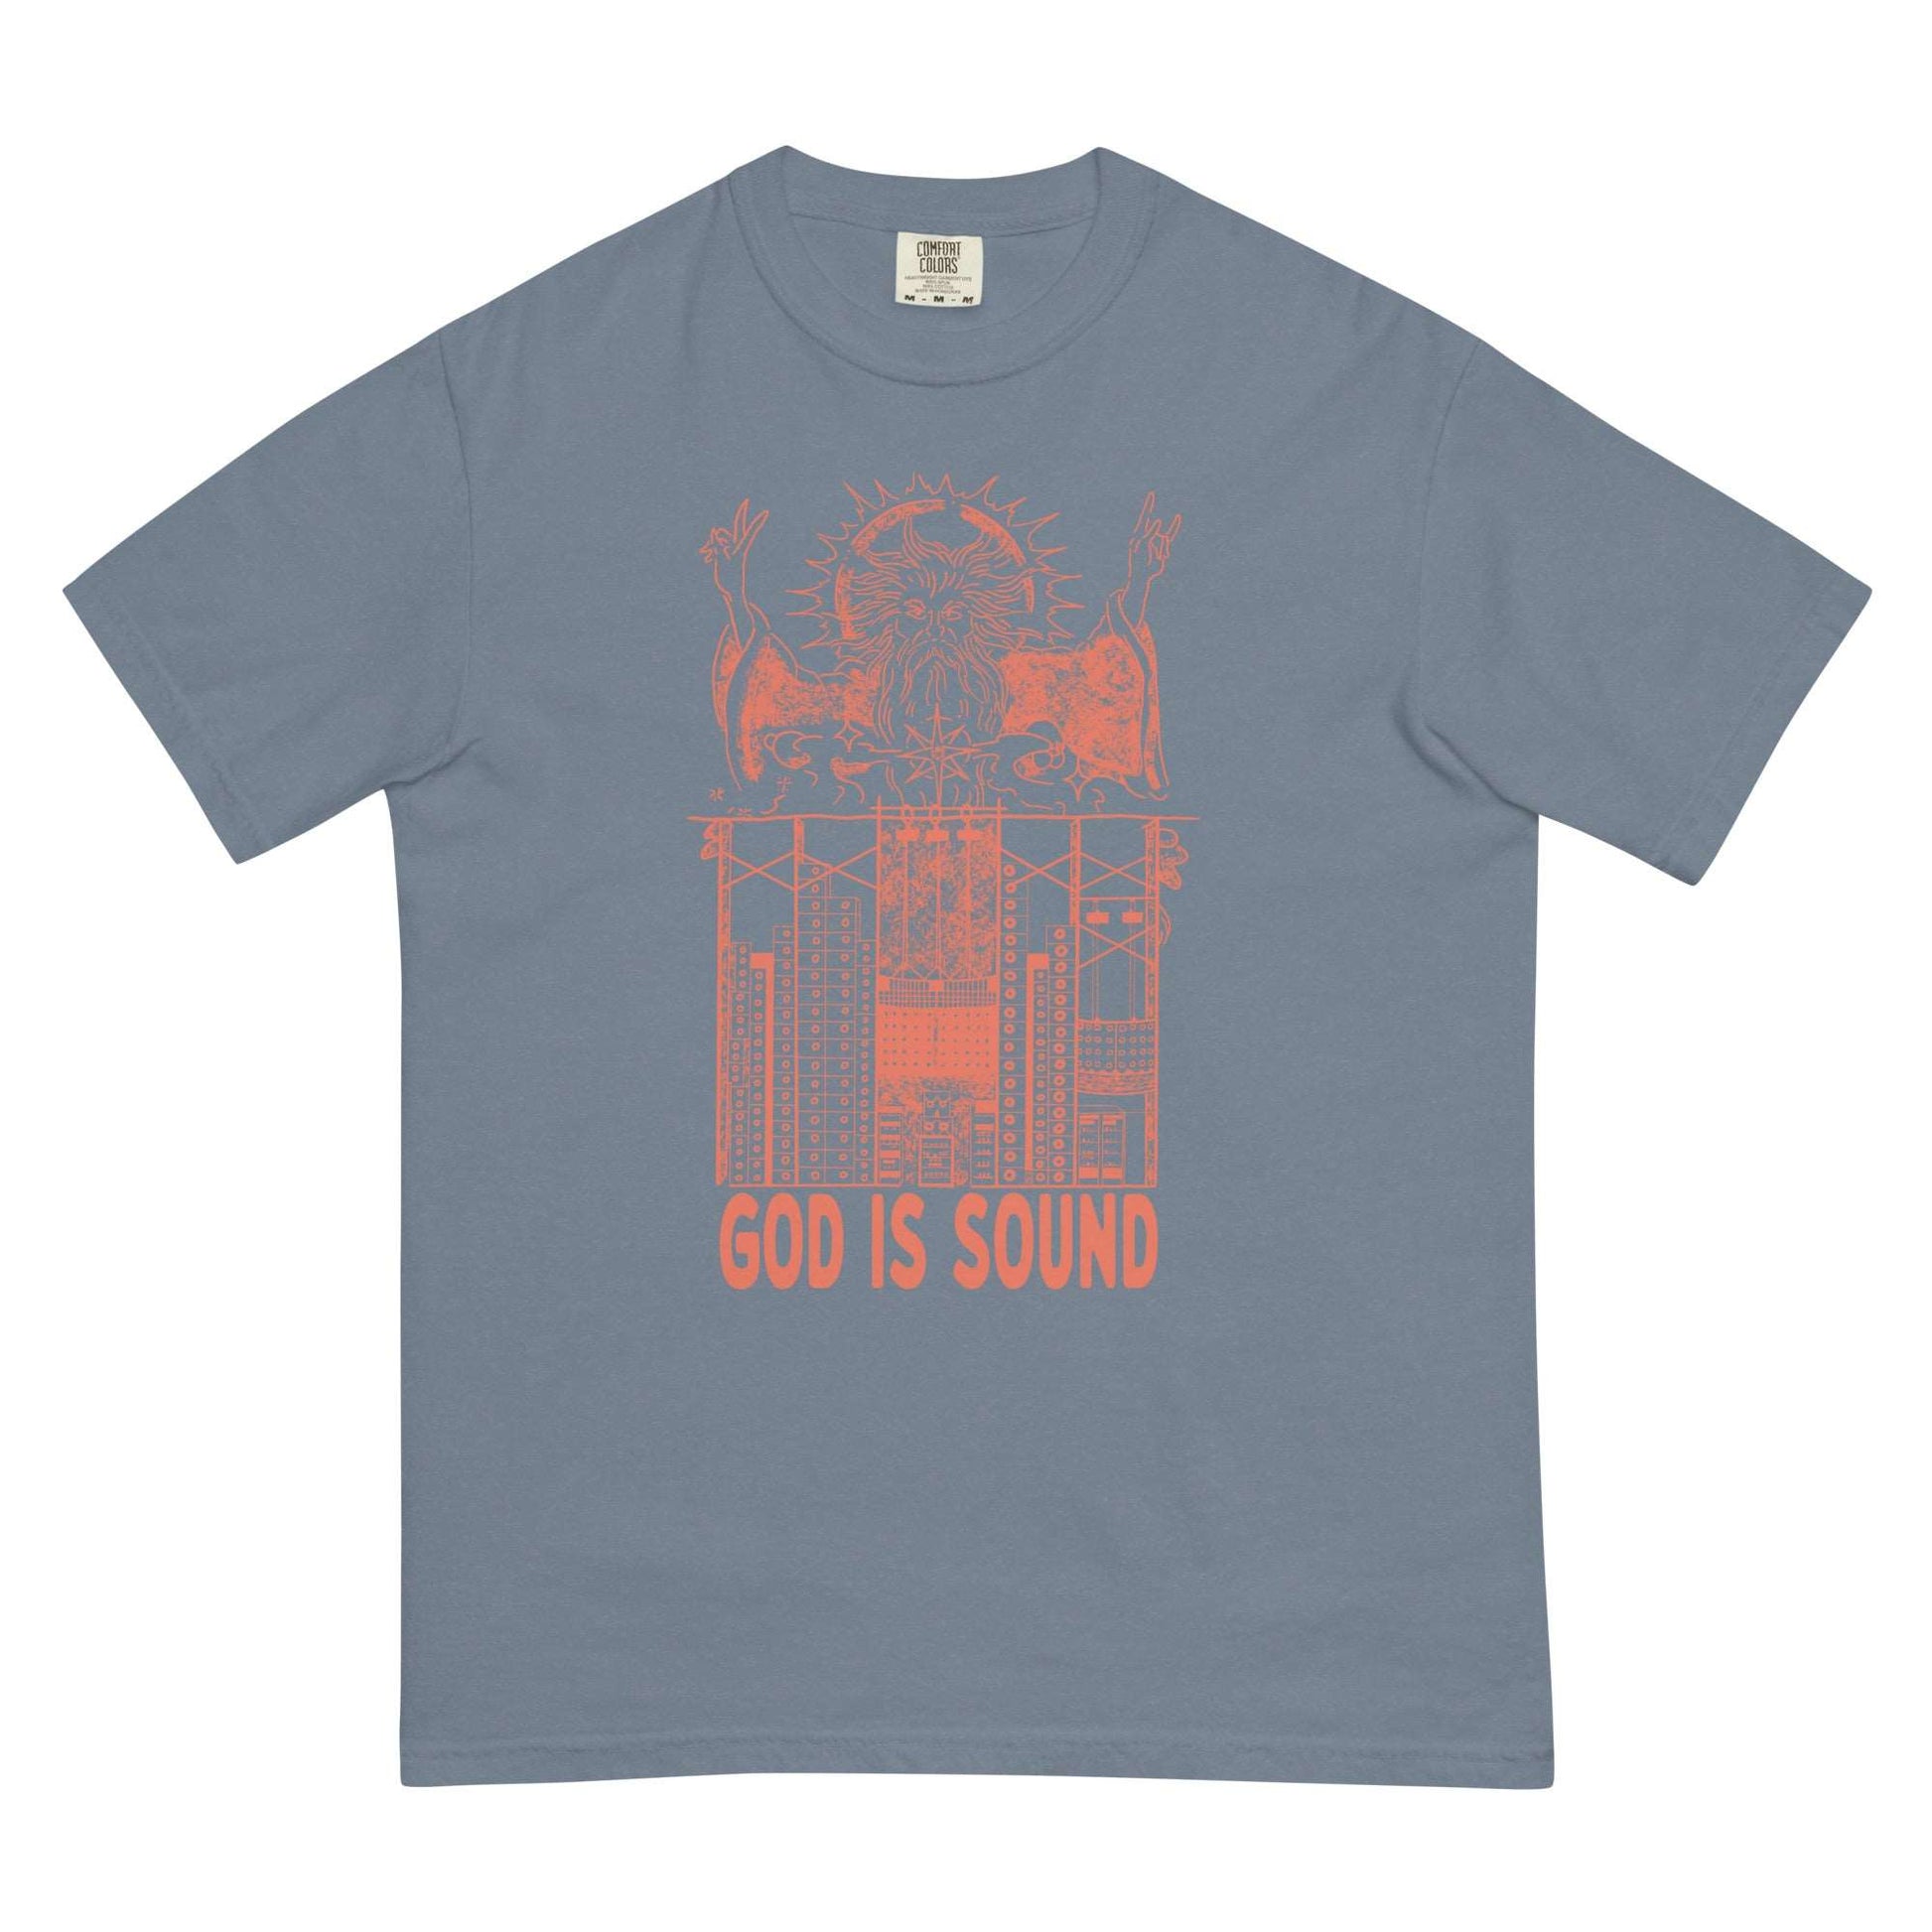 God Is Sound T-Shirt